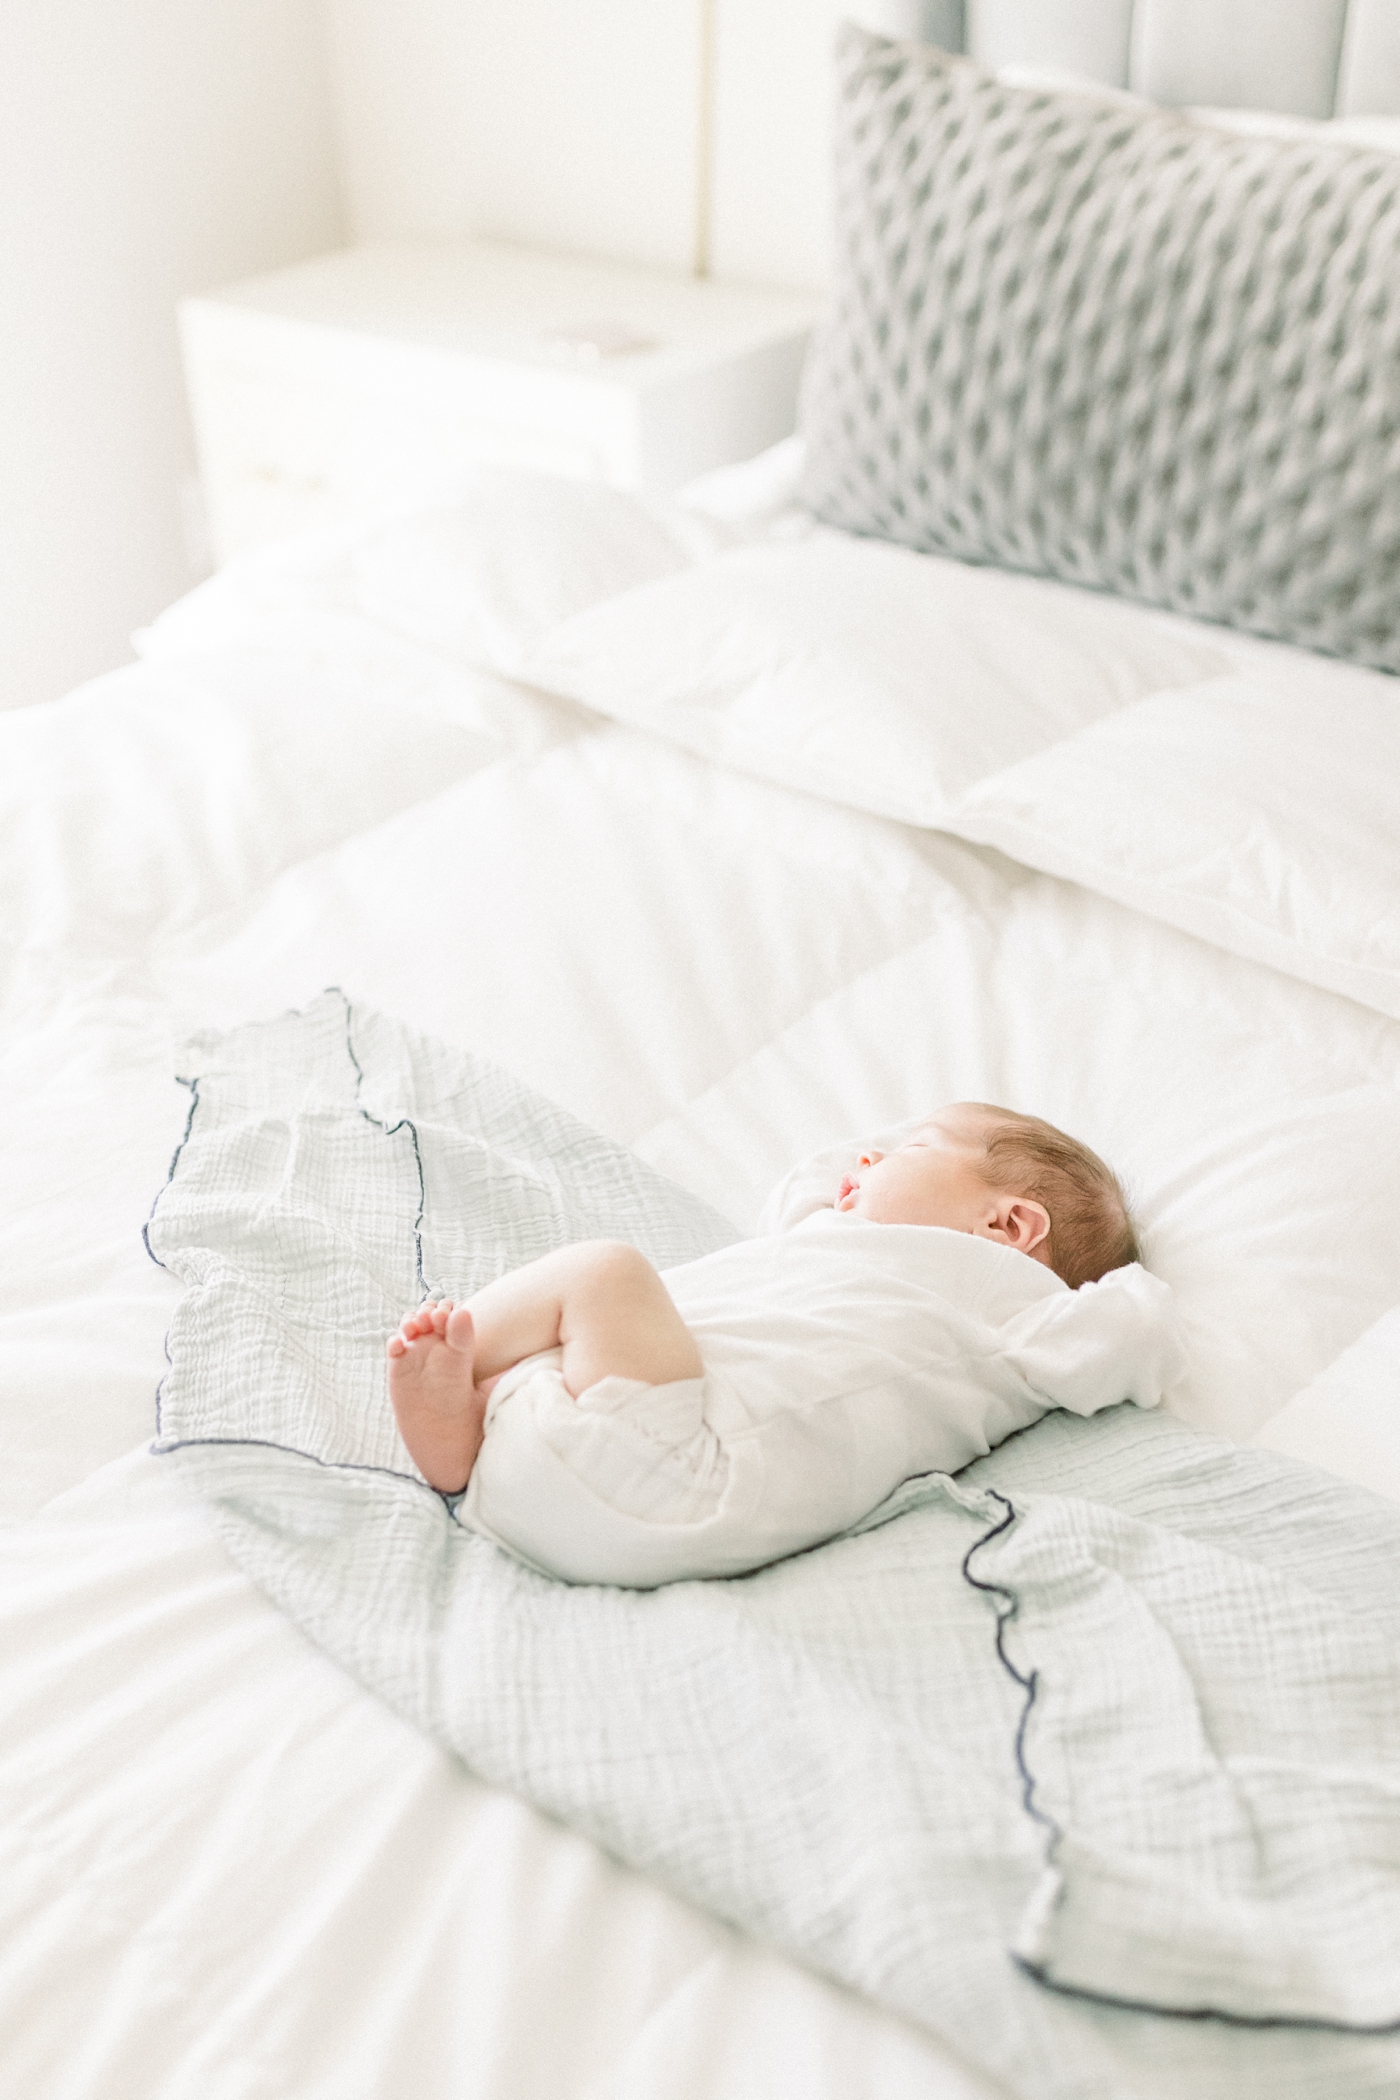 Newborn baby sleeping on a bed | Photo by Caitlyn Motycka Photography.